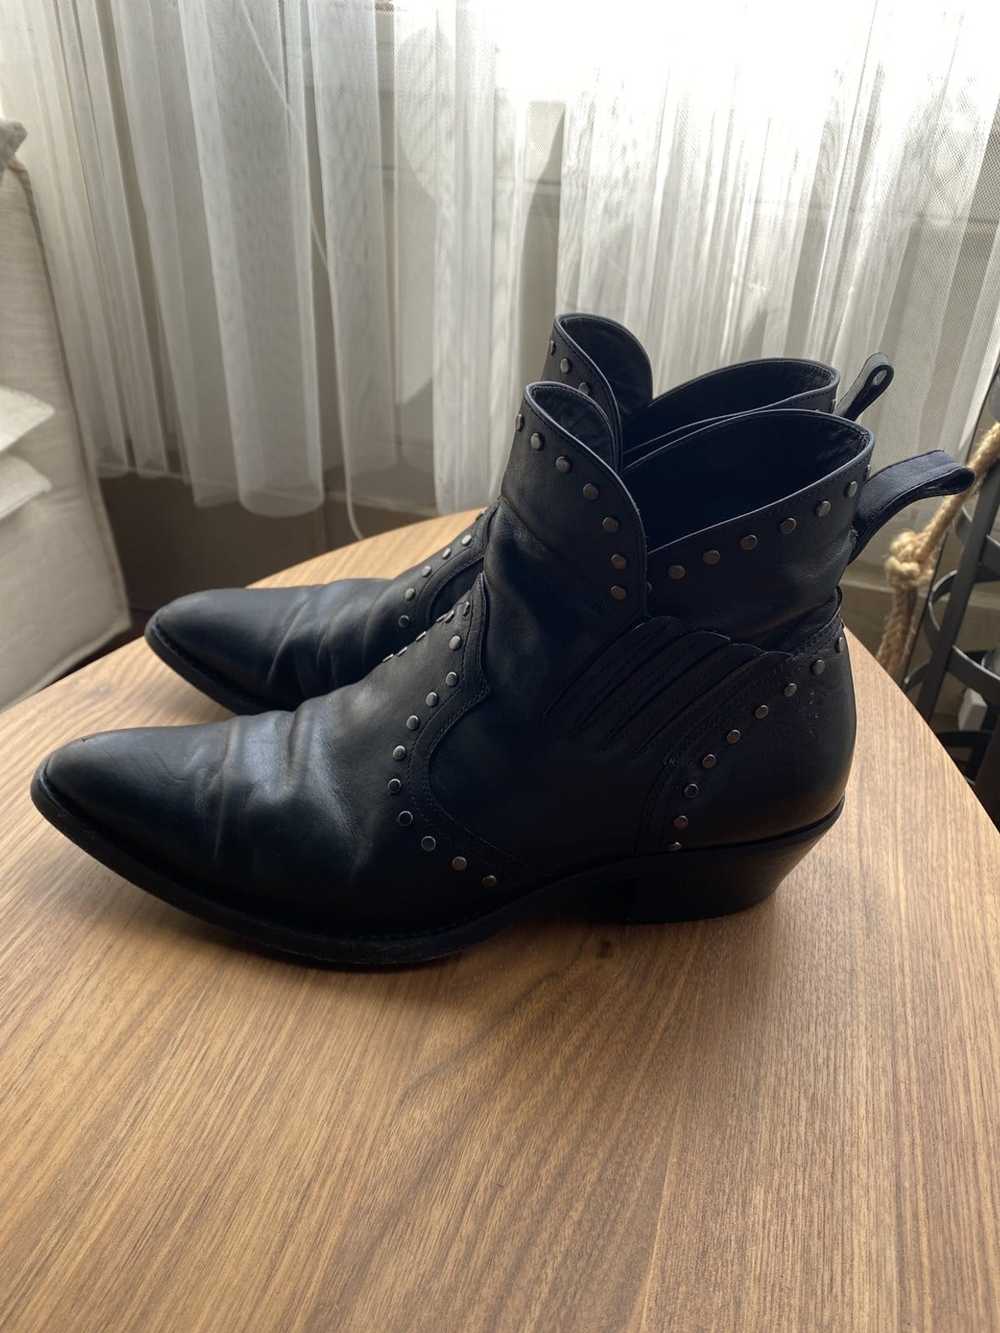 Yves Saint Laurent Kangaroo studded boots - image 4